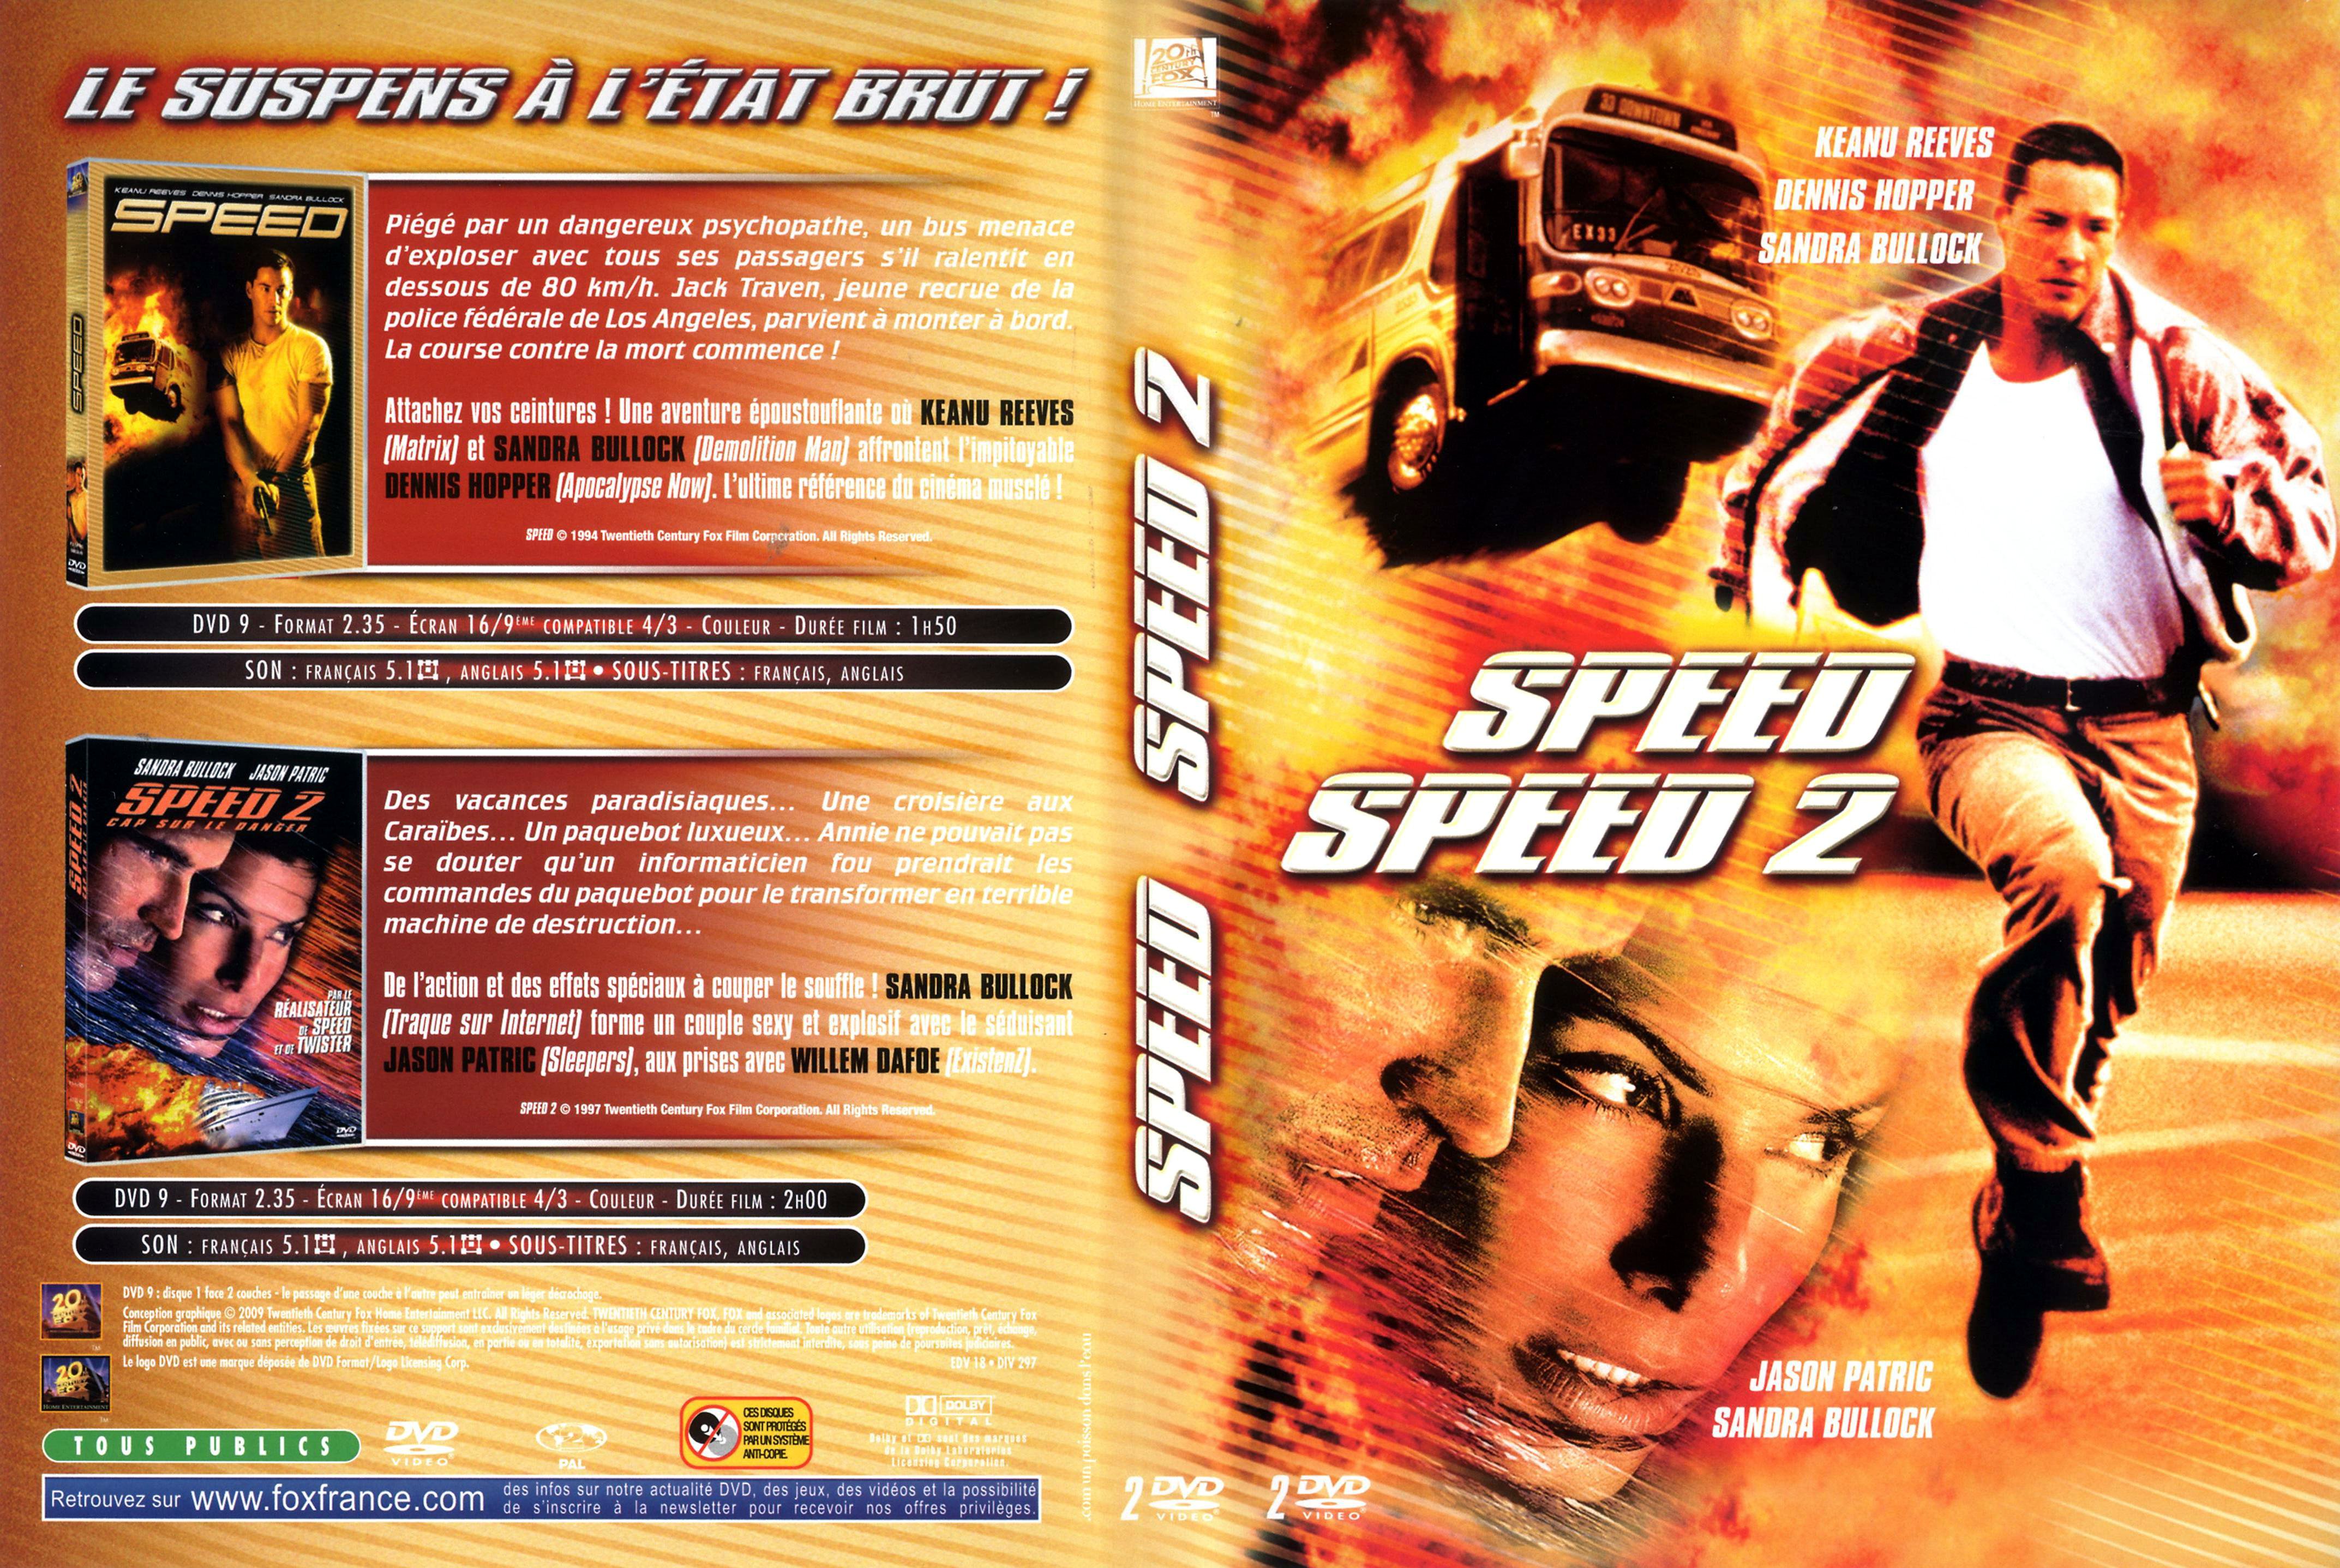 Jaquette DVD Speed + Speed 2